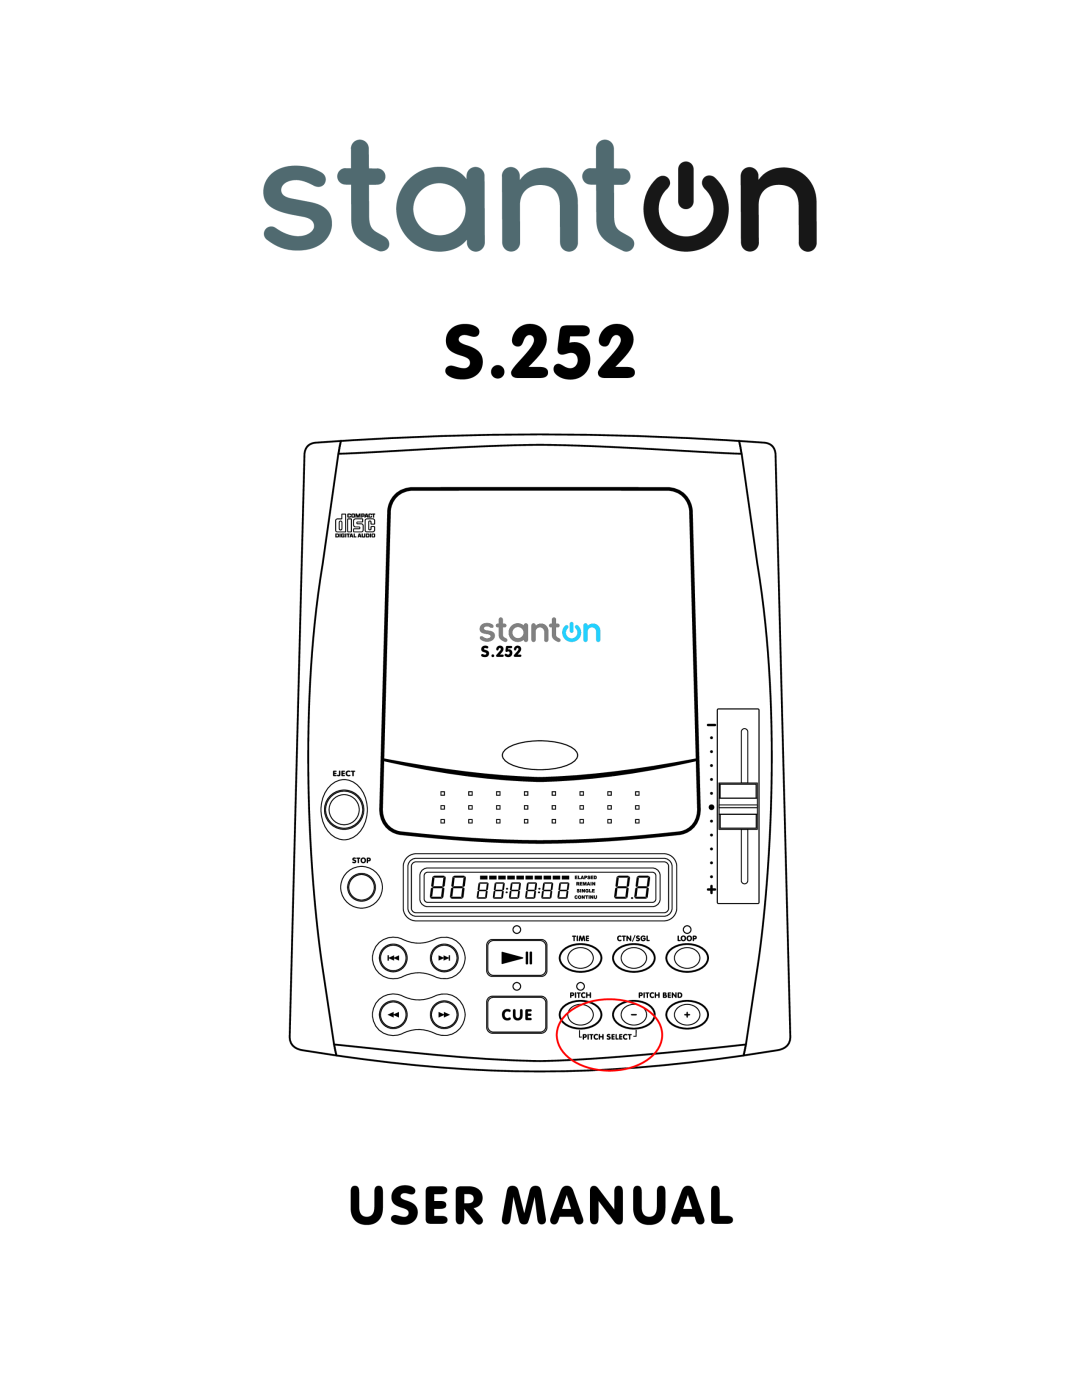 Stanton S.252 user manual 